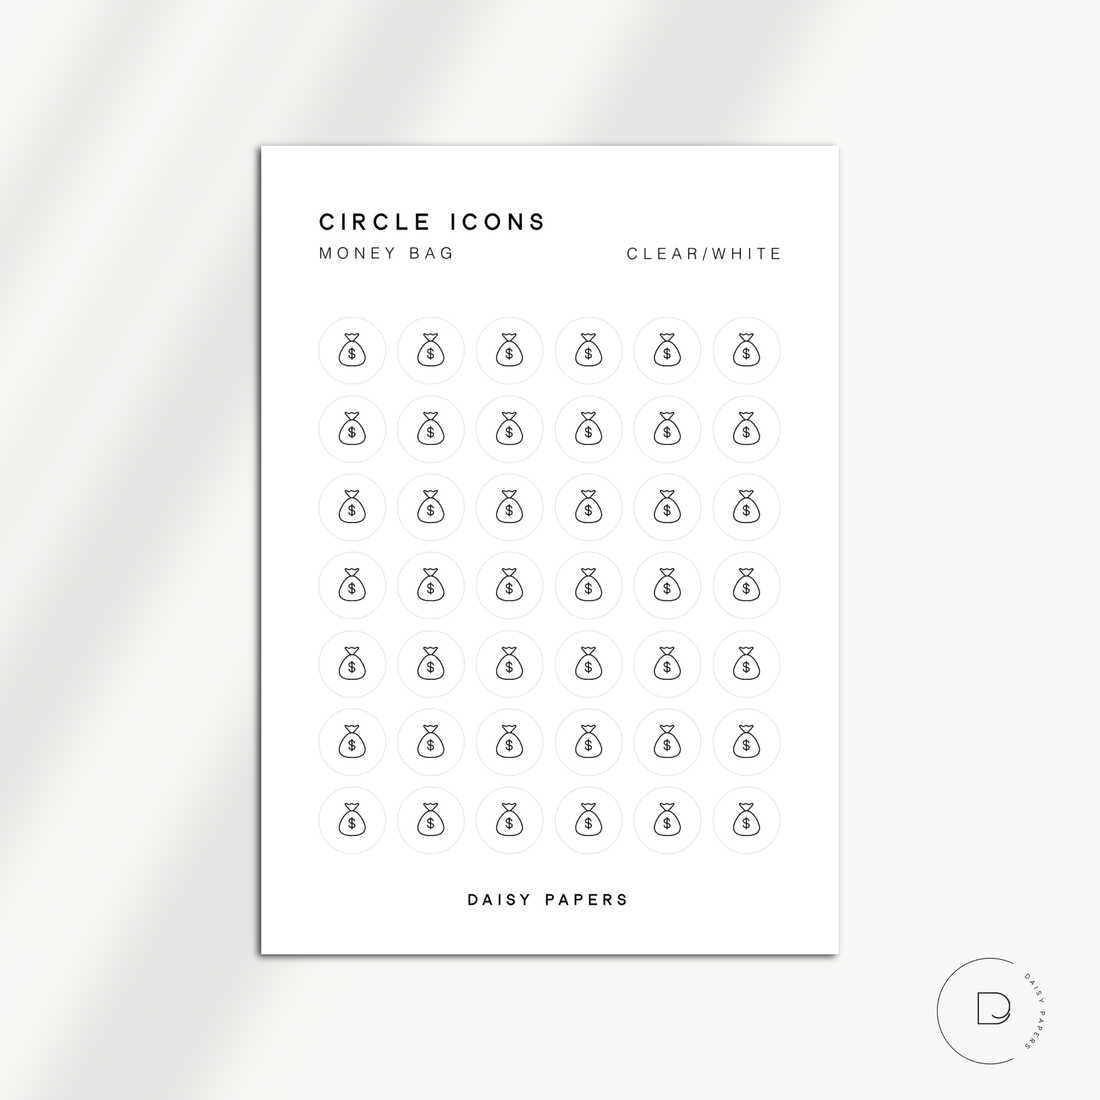 CIRCLE ICONS - MONEY BAG